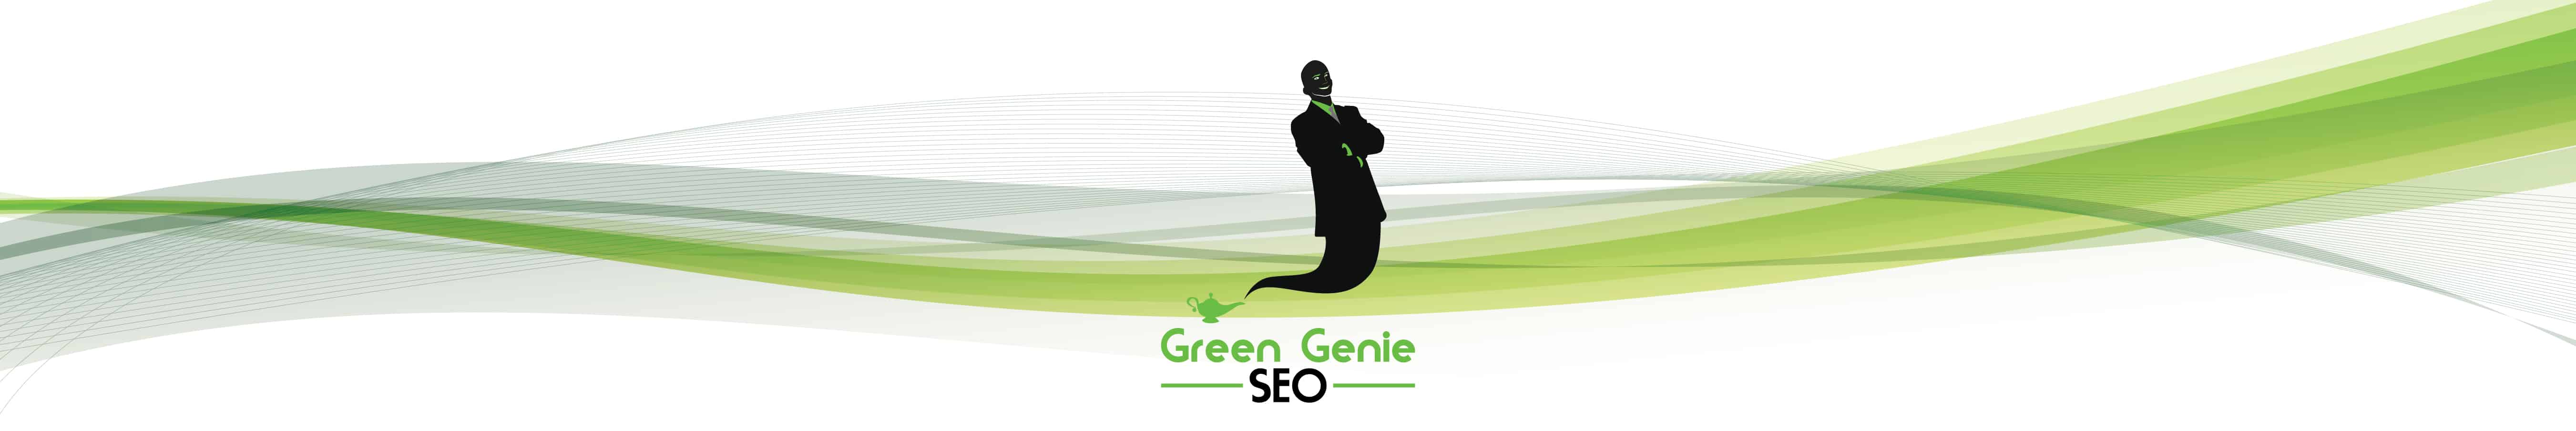 Green Genie SEO